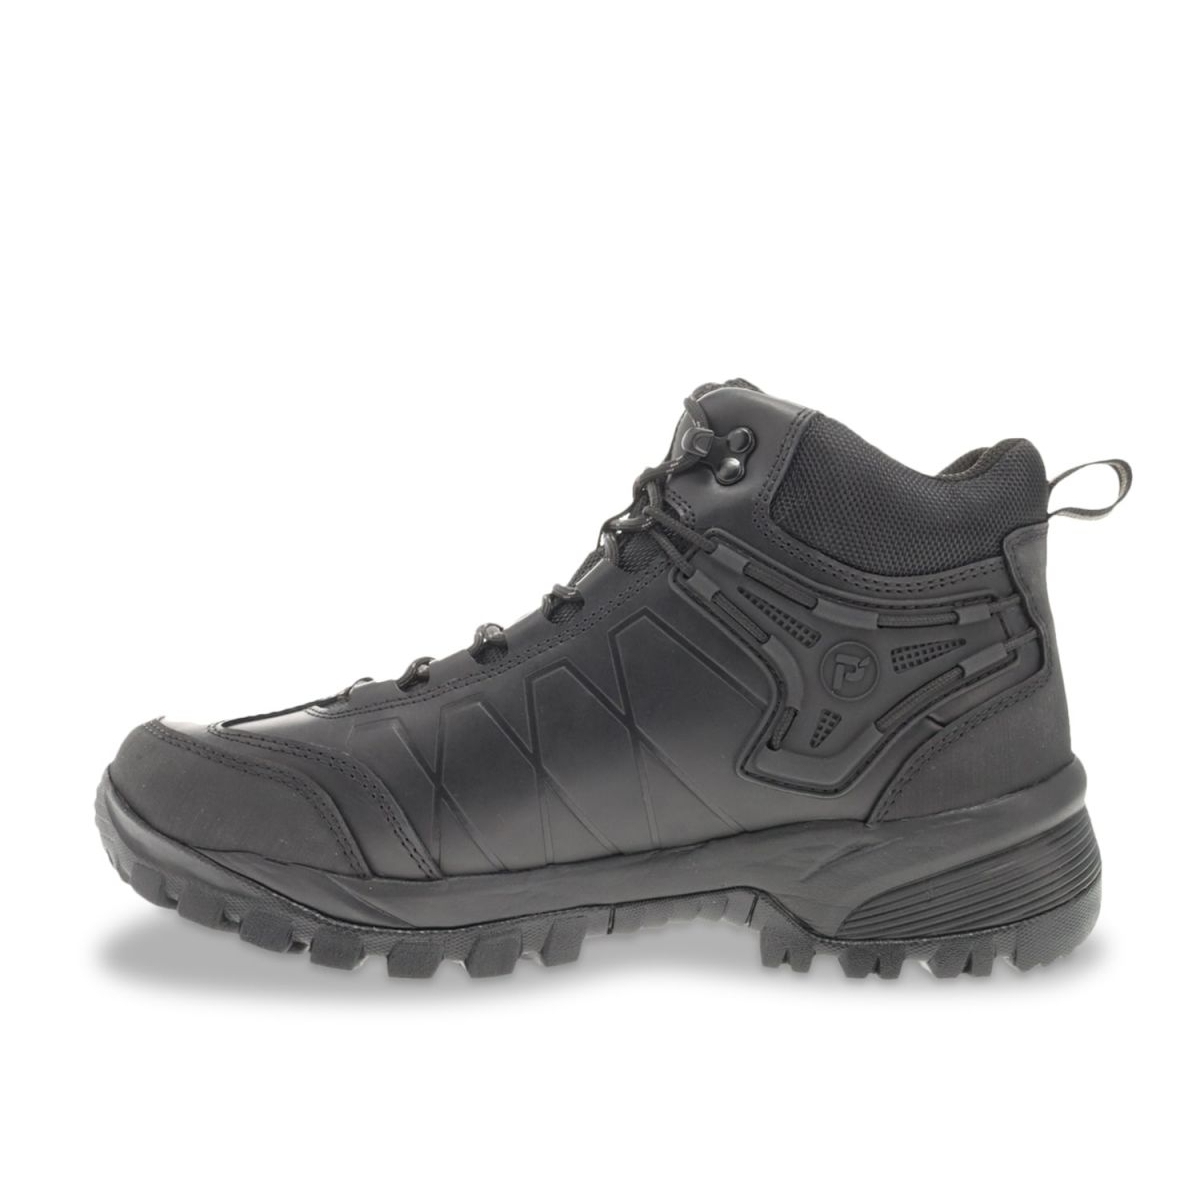 Propet Men's Ridge Walker Force Hiking Boots Black - MBA052LBLK BLACK - BLACK, 11.5